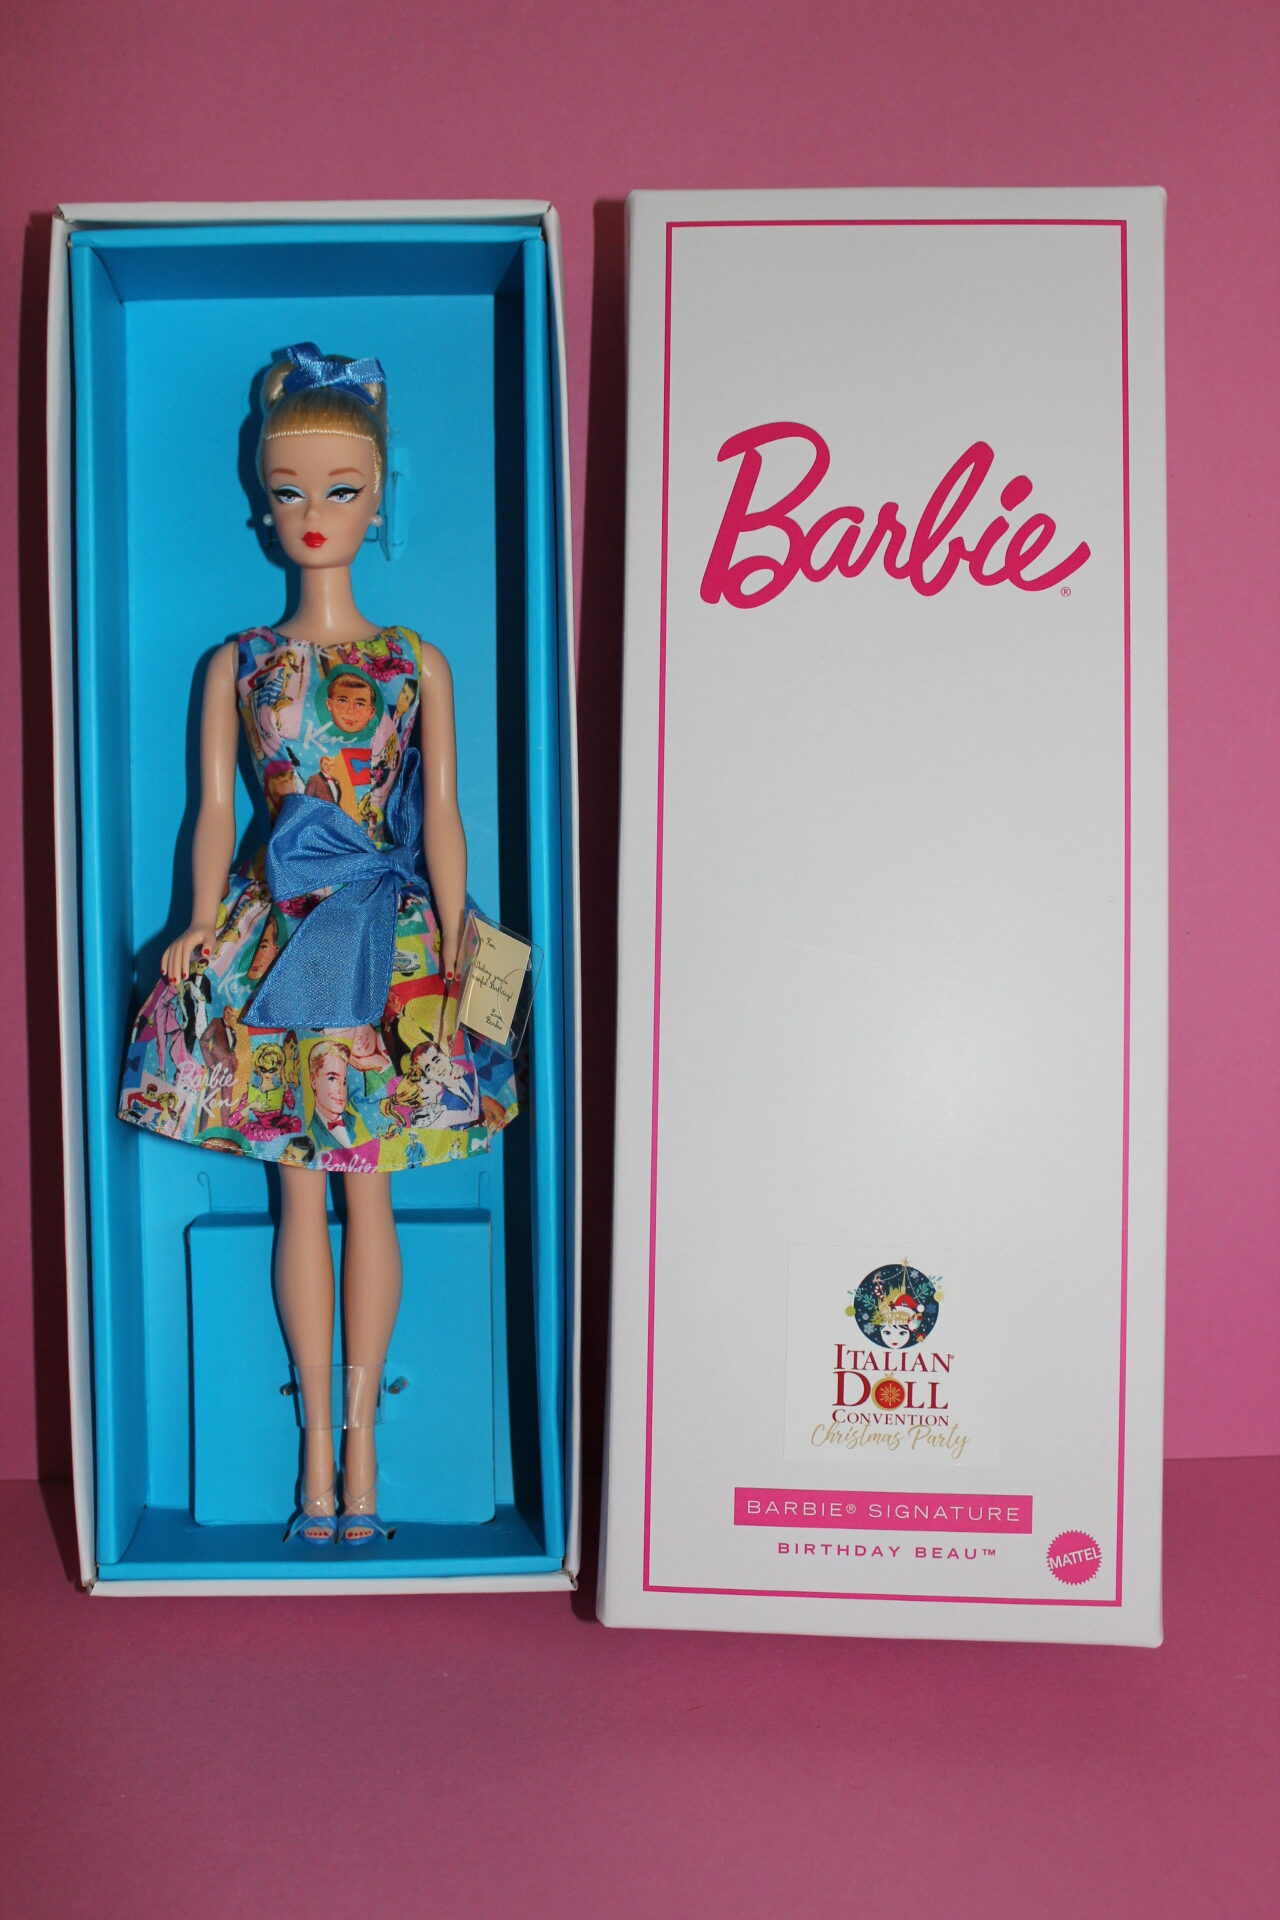 Collector Barbie Italian Doll Convention Birthday Beau NRFB 2021 